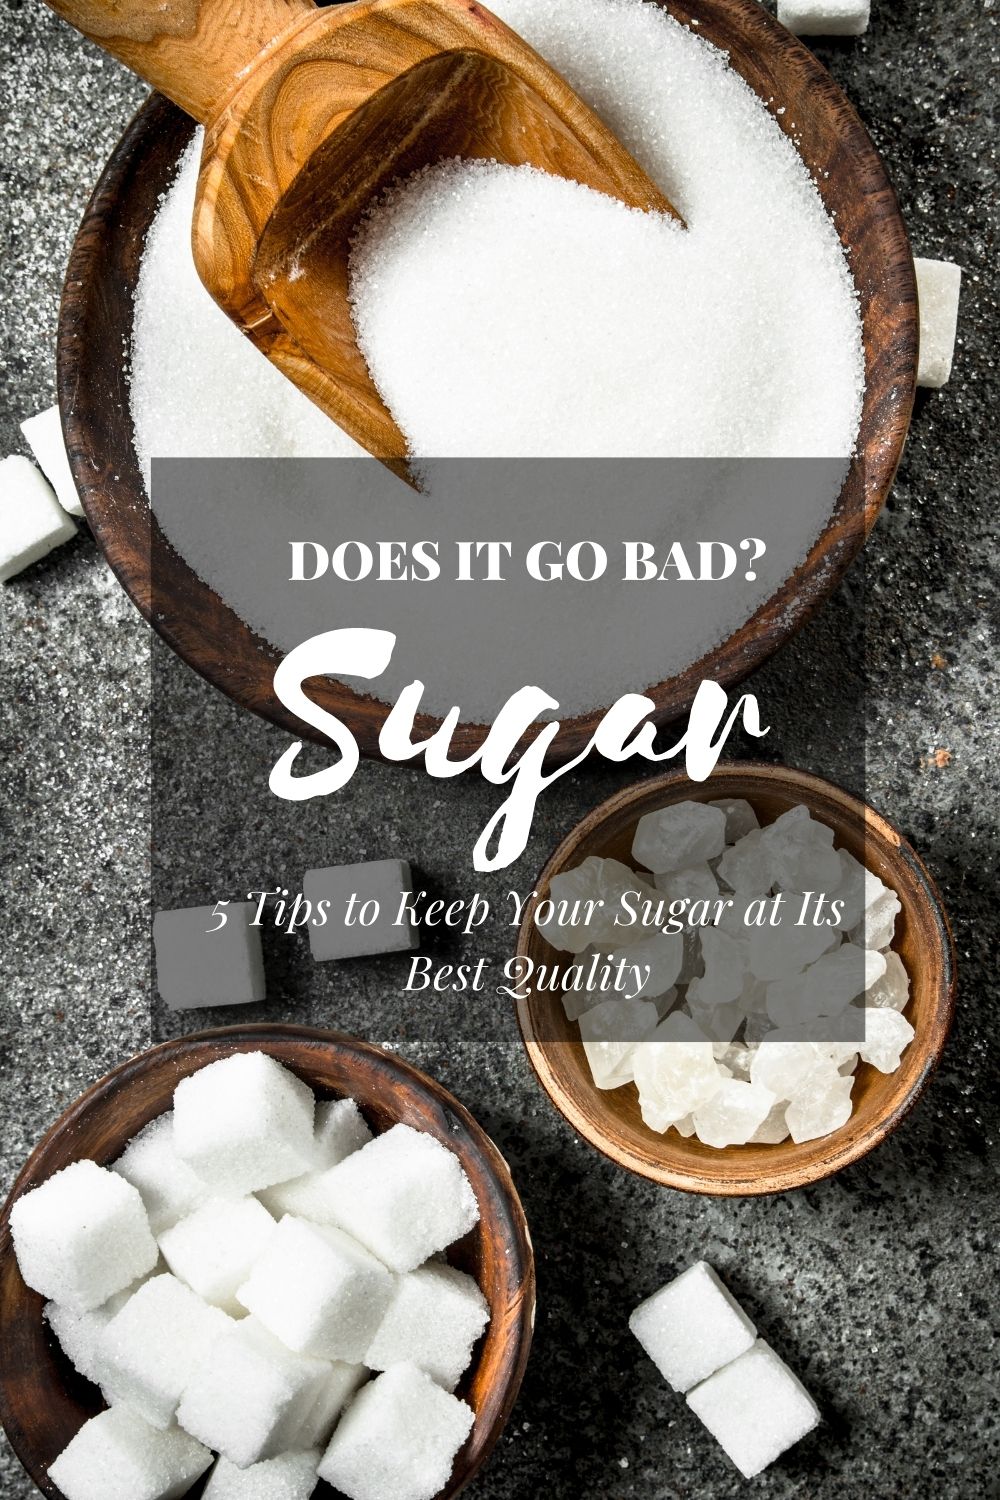 https://www.streetsmartkitchen.com/wp-content/uploads/Does-Sugar-Go-Bad.jpeg